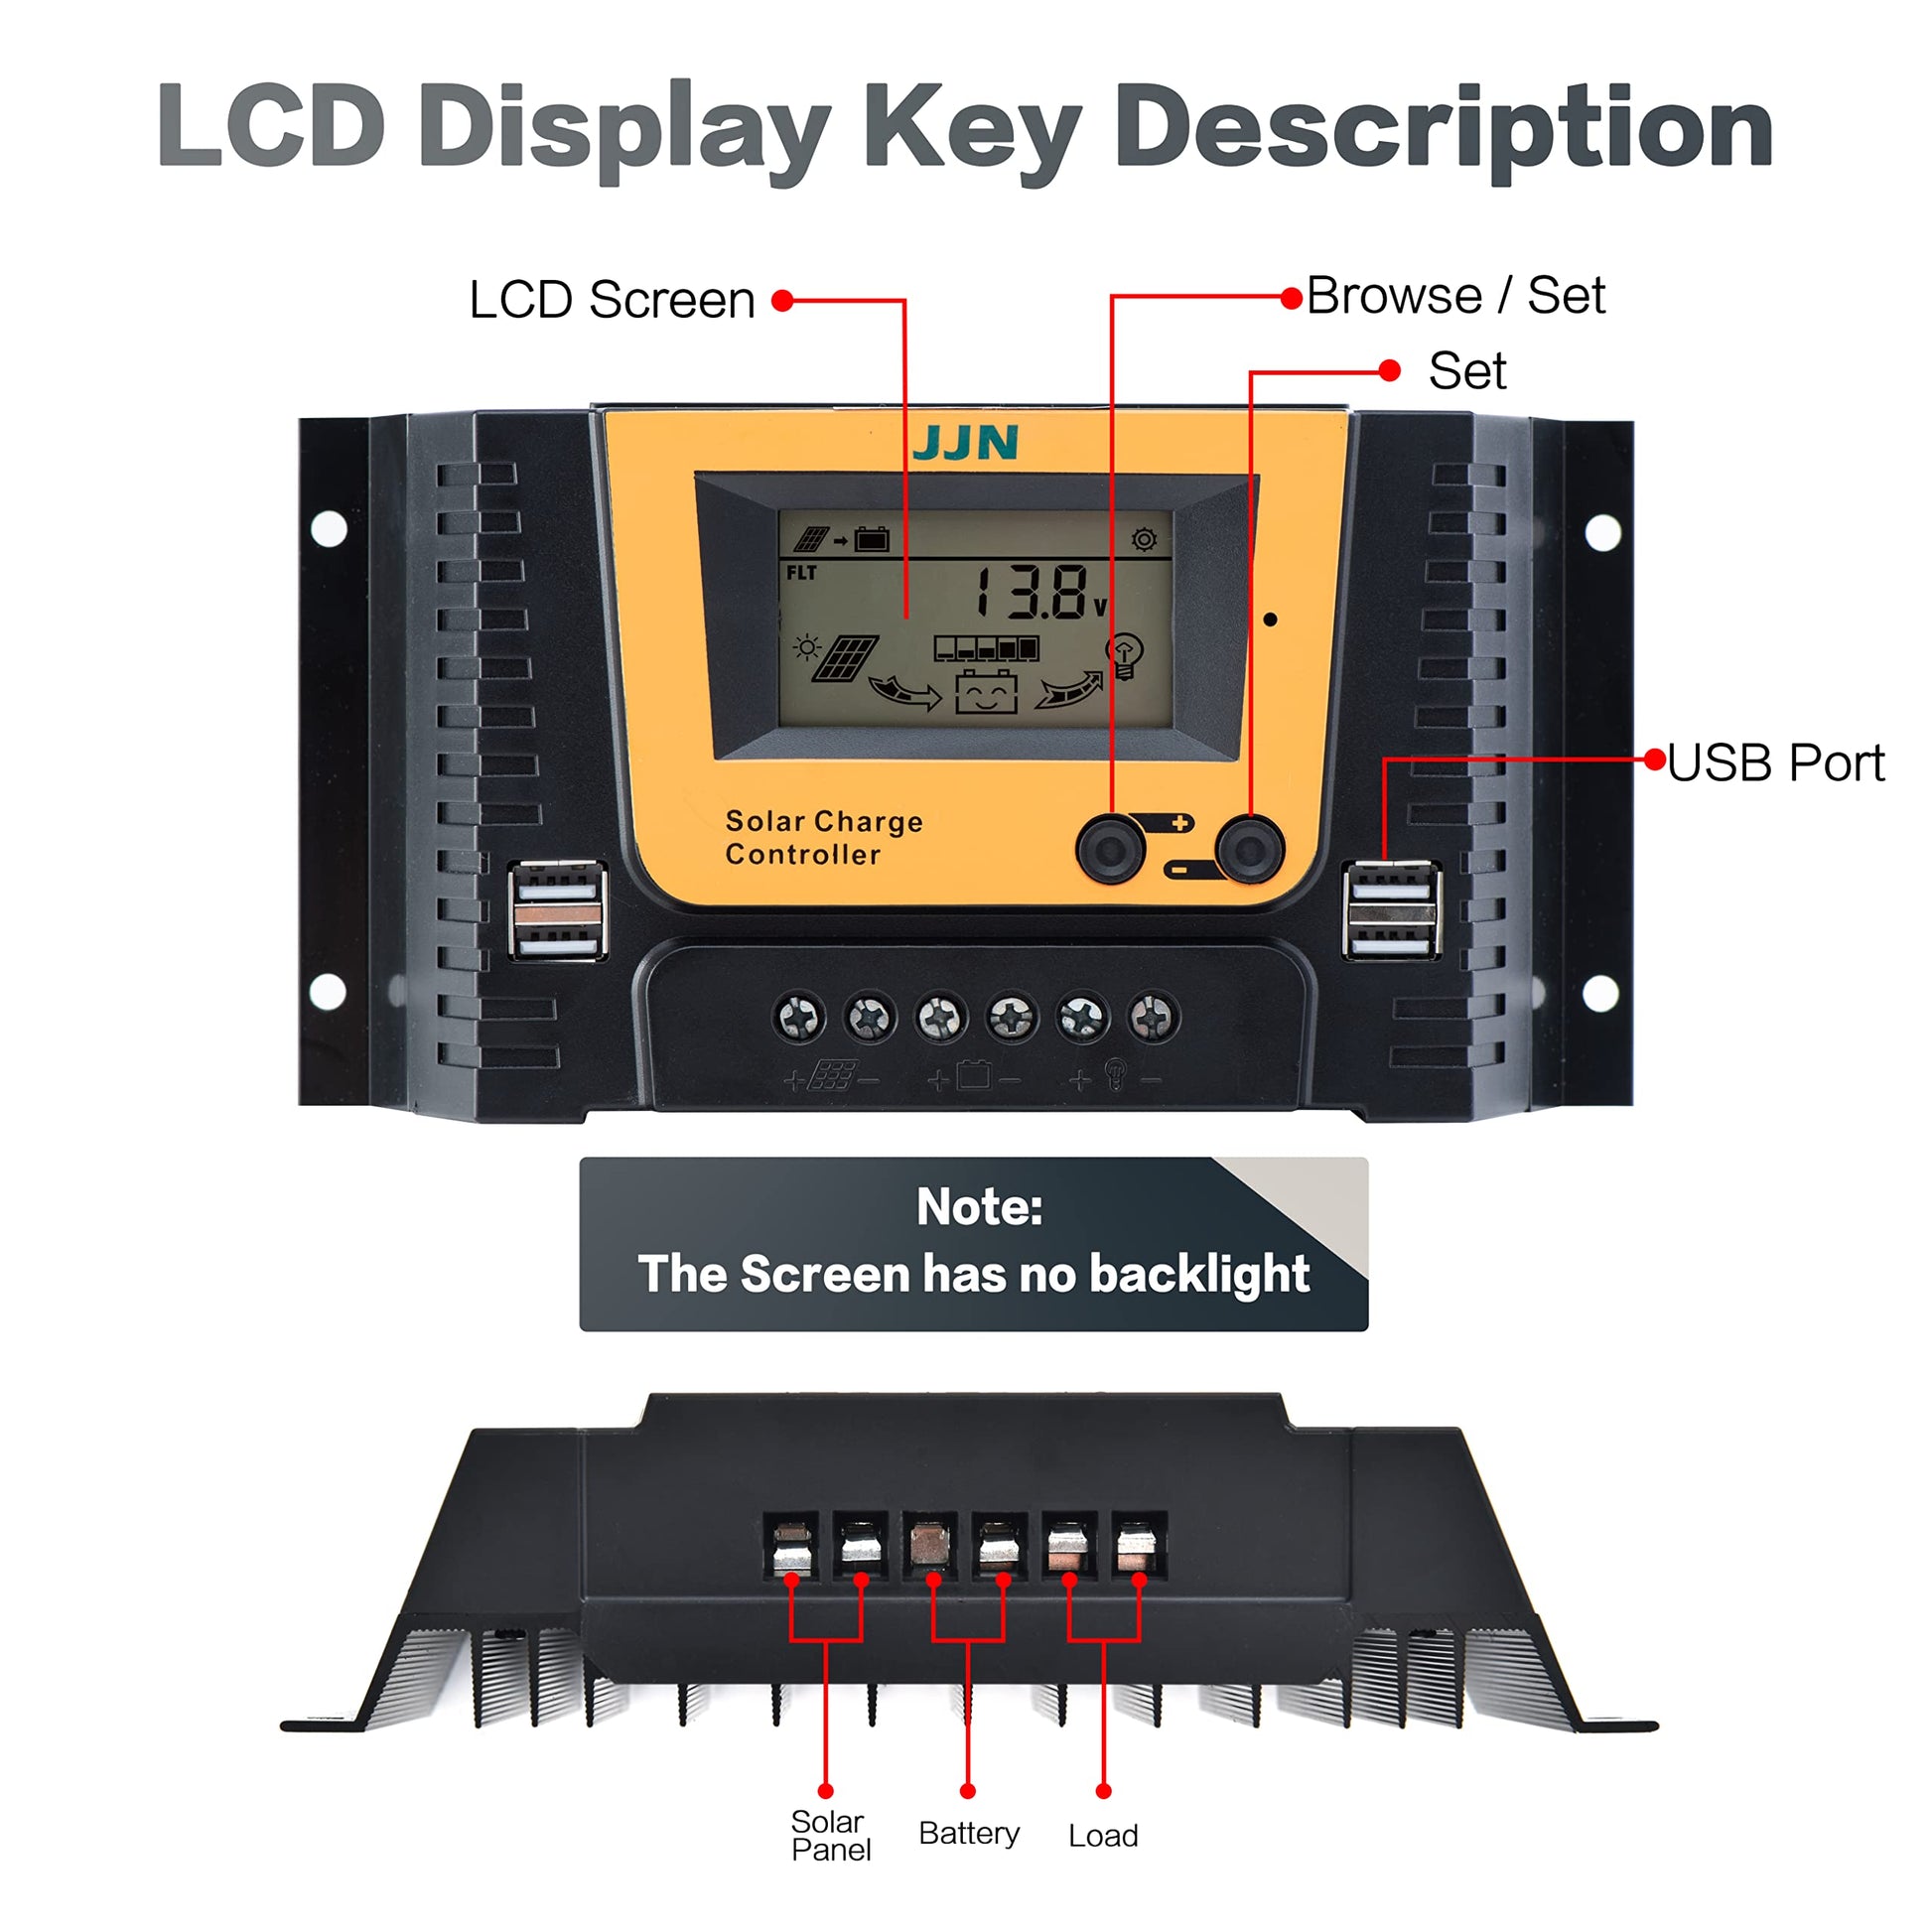 LCD display key description